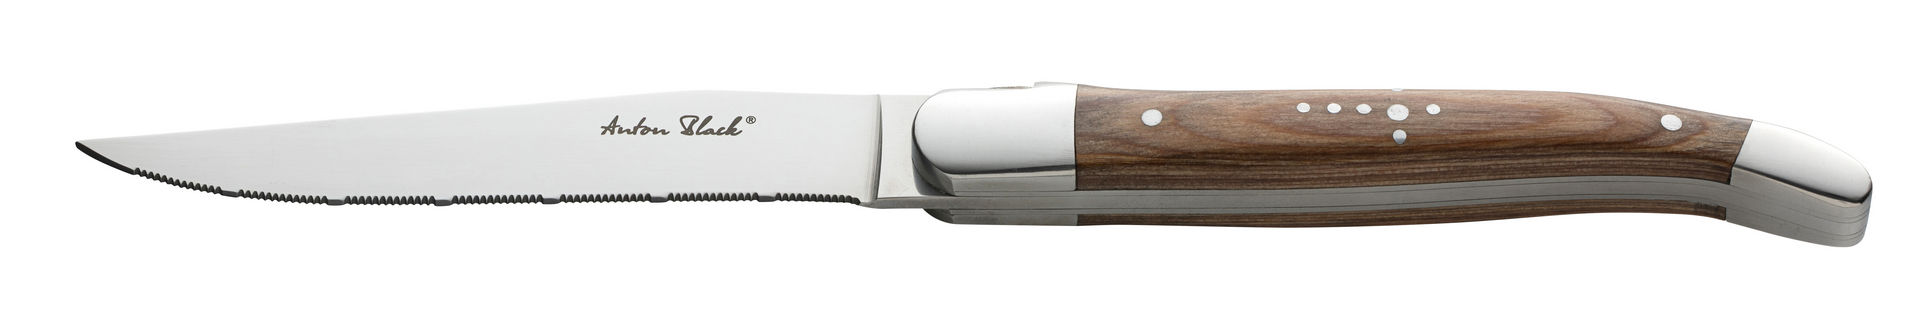 Laguiole Wood Handled Steak Knife - Serrated Edge - F91197-000000-B01012 (Pack of 12)